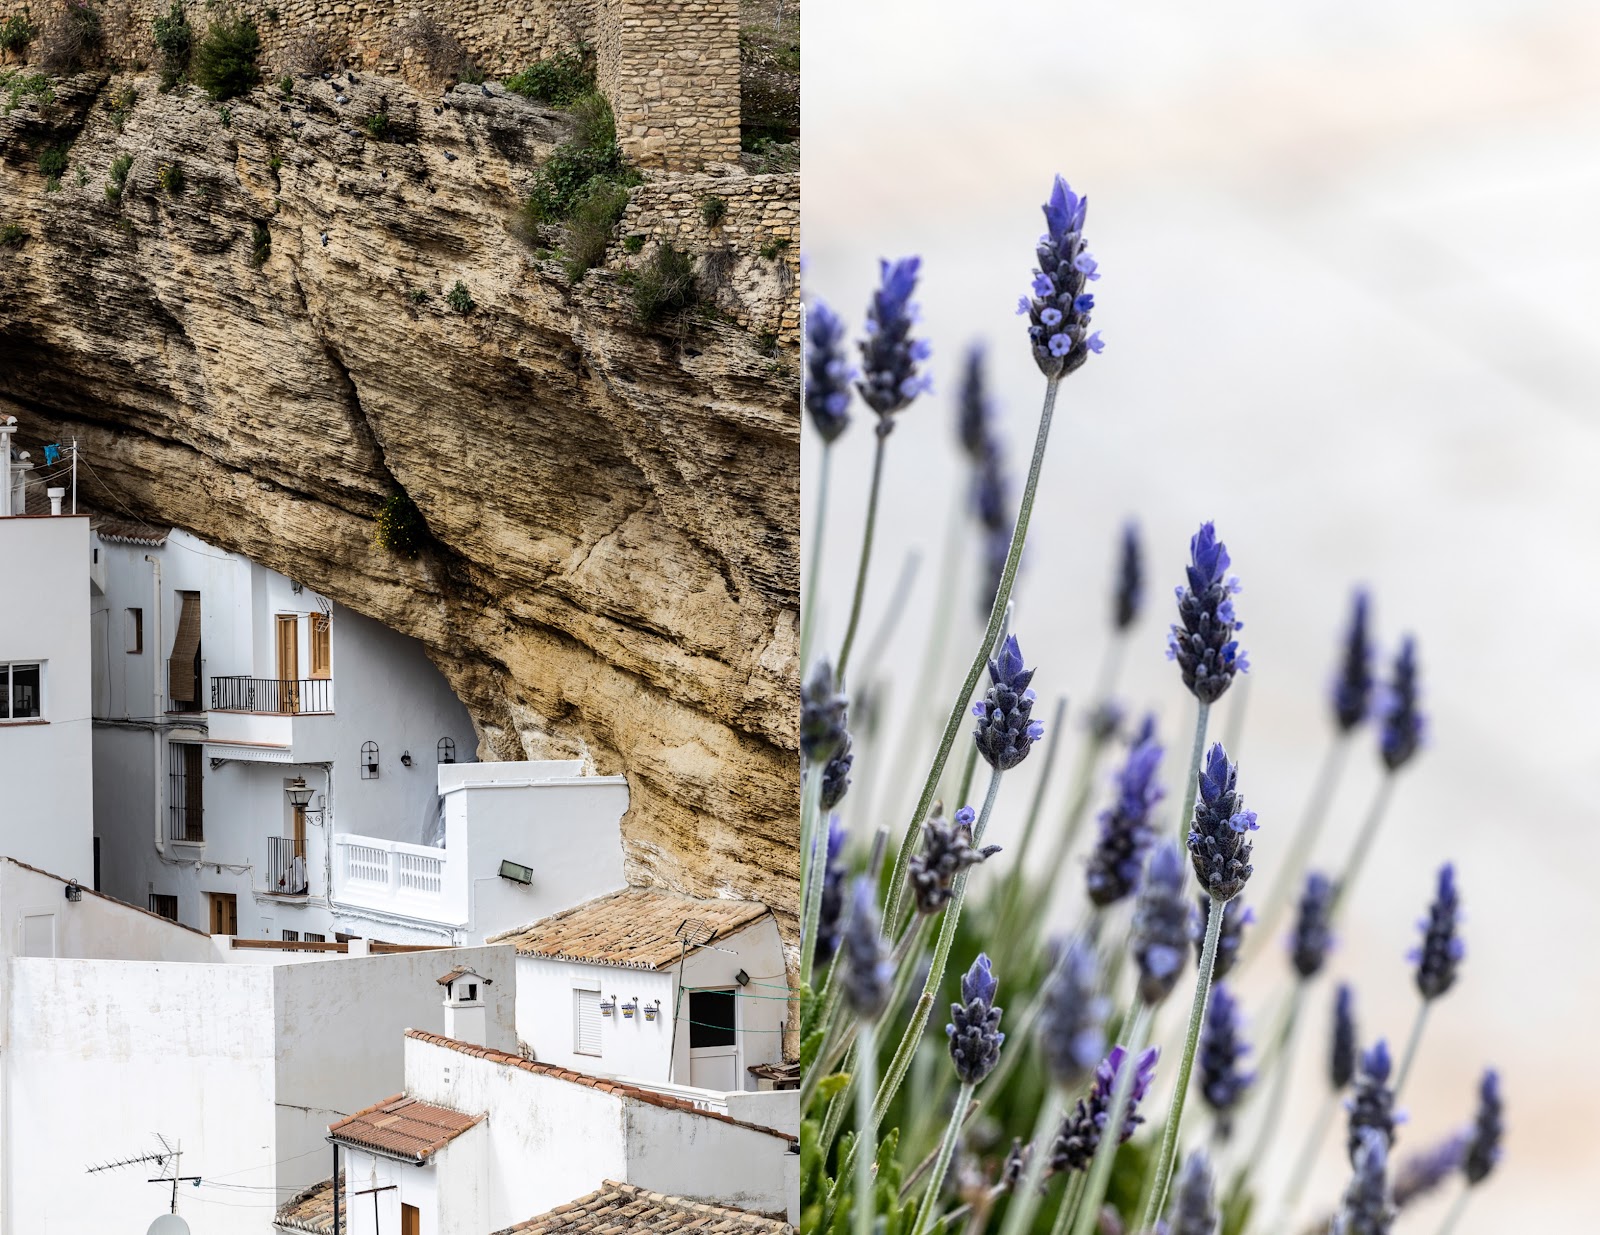 Setenil de las Bodegas, visit Spain, Andalucia, visit Andalucia, matkustus, valokuvaus, valokuvaaja Frida Steiner, visualaddict blog, travelblog, mihin mennä Andaluciassa